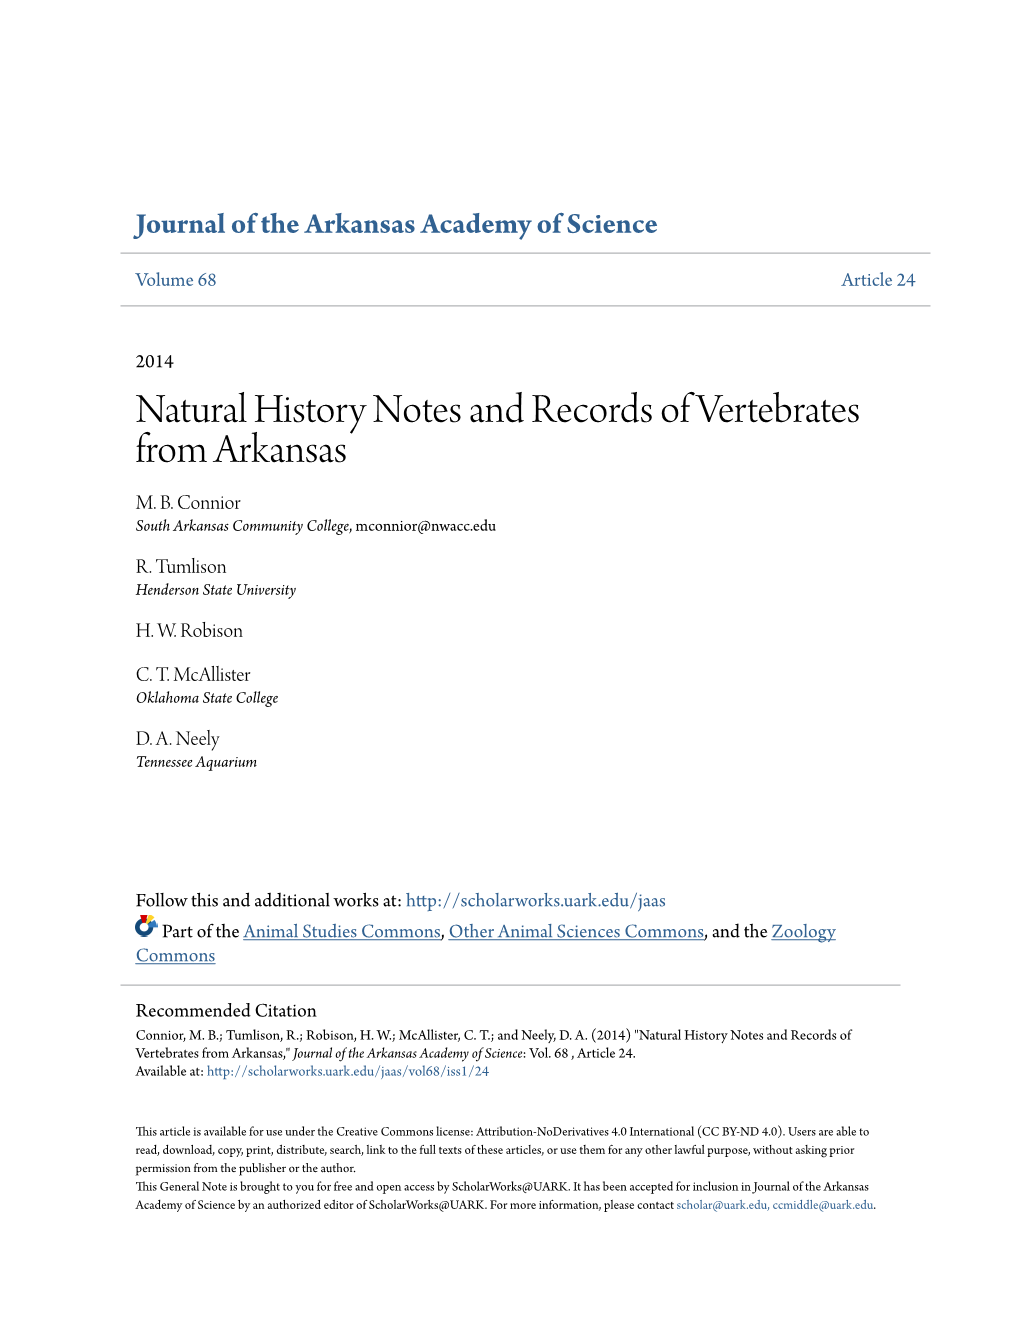 Natural History Notes and Records of Vertebrates from Arkansas M